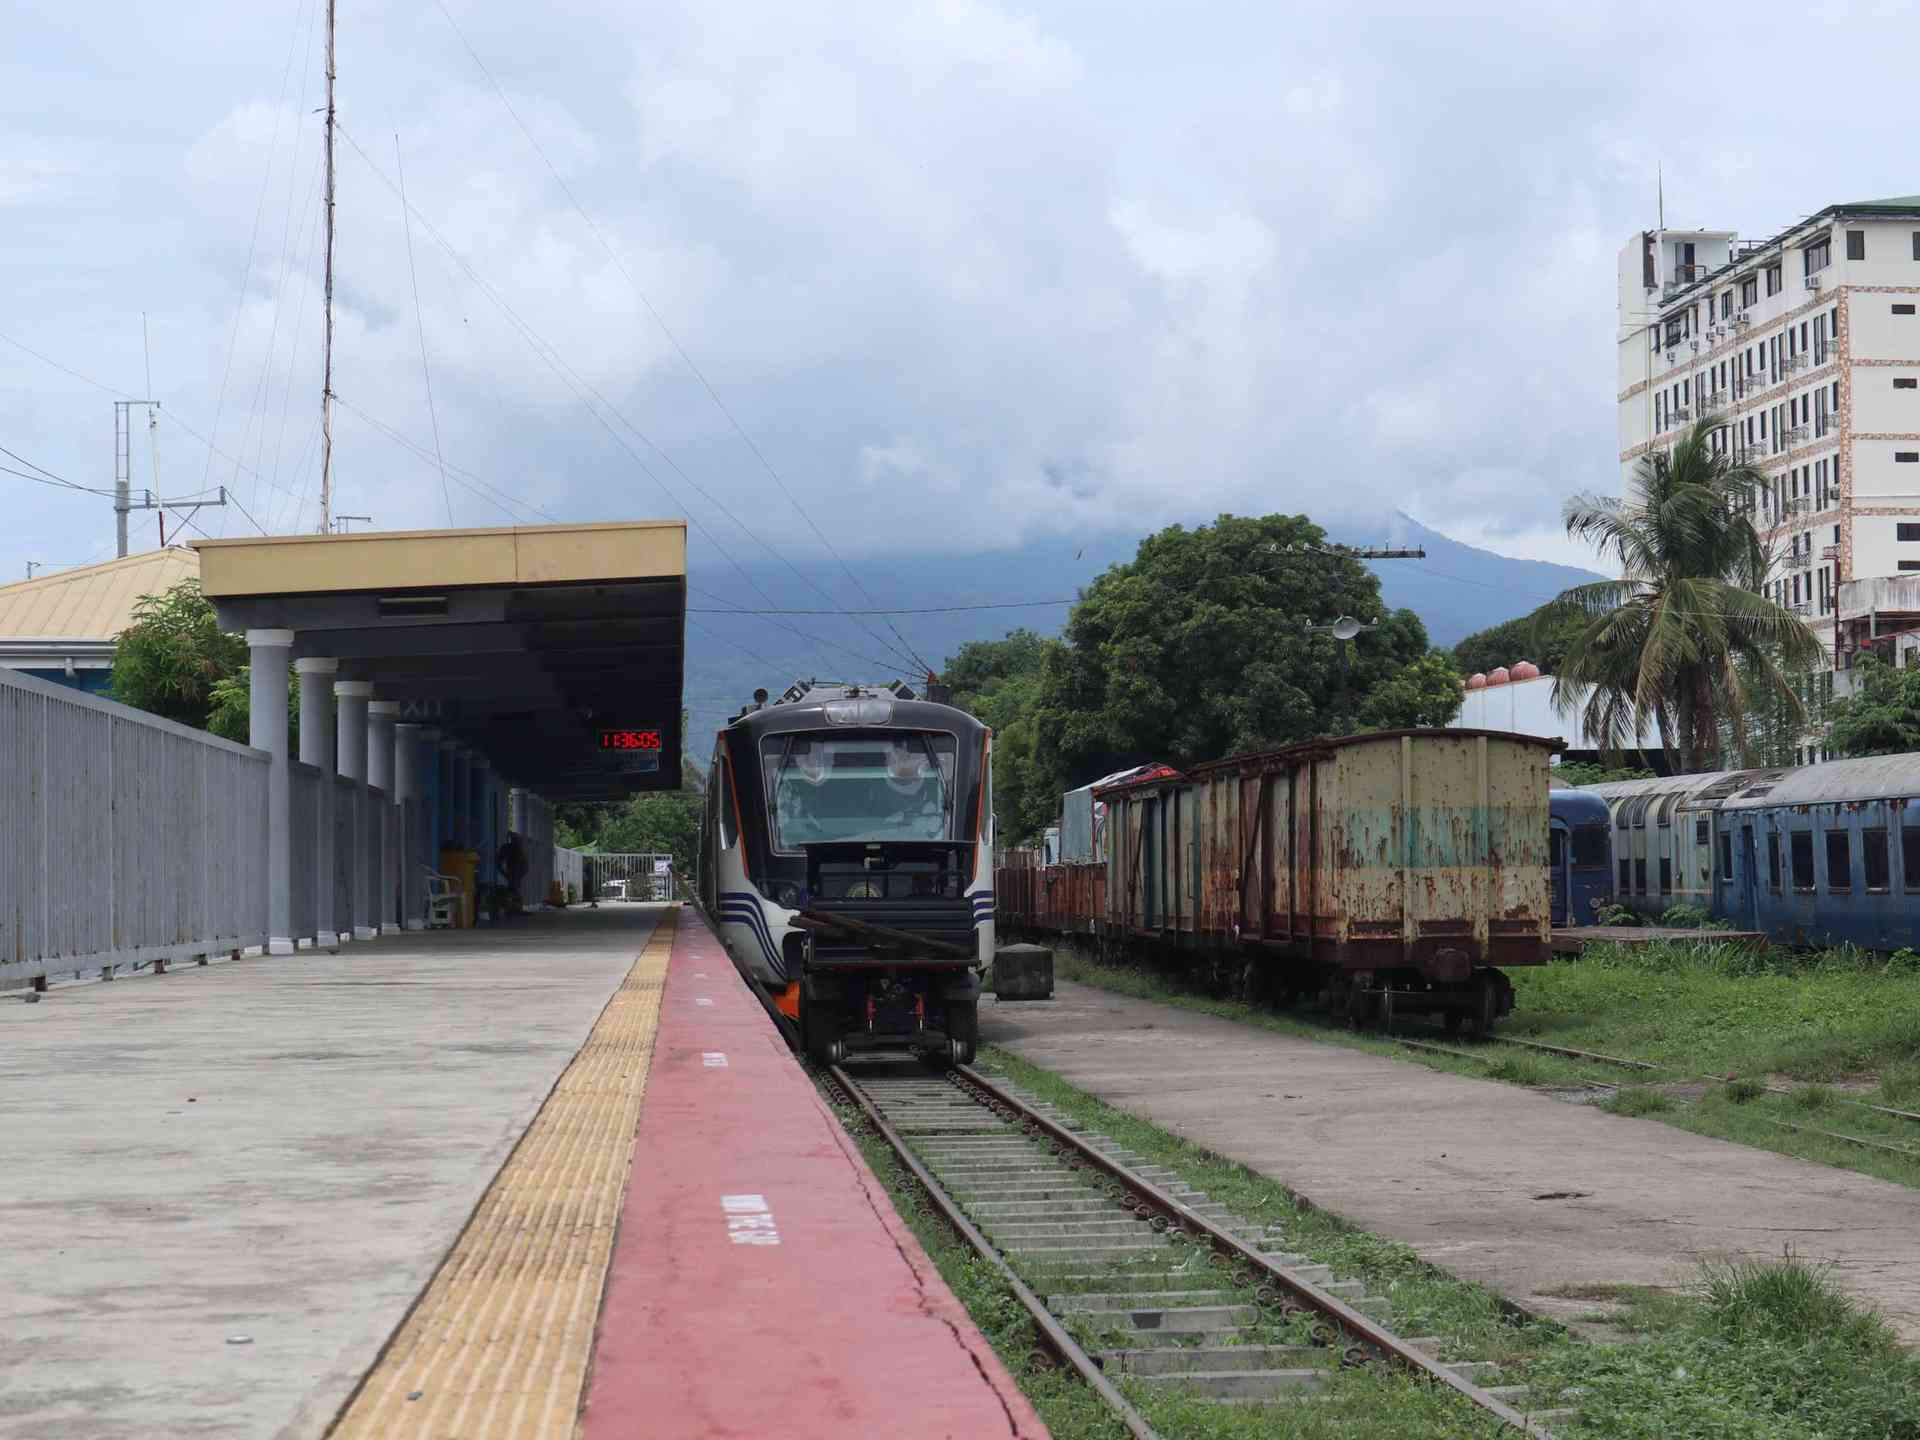 PNR temporarily suspends Calamba-San Pablo trips for maintenance